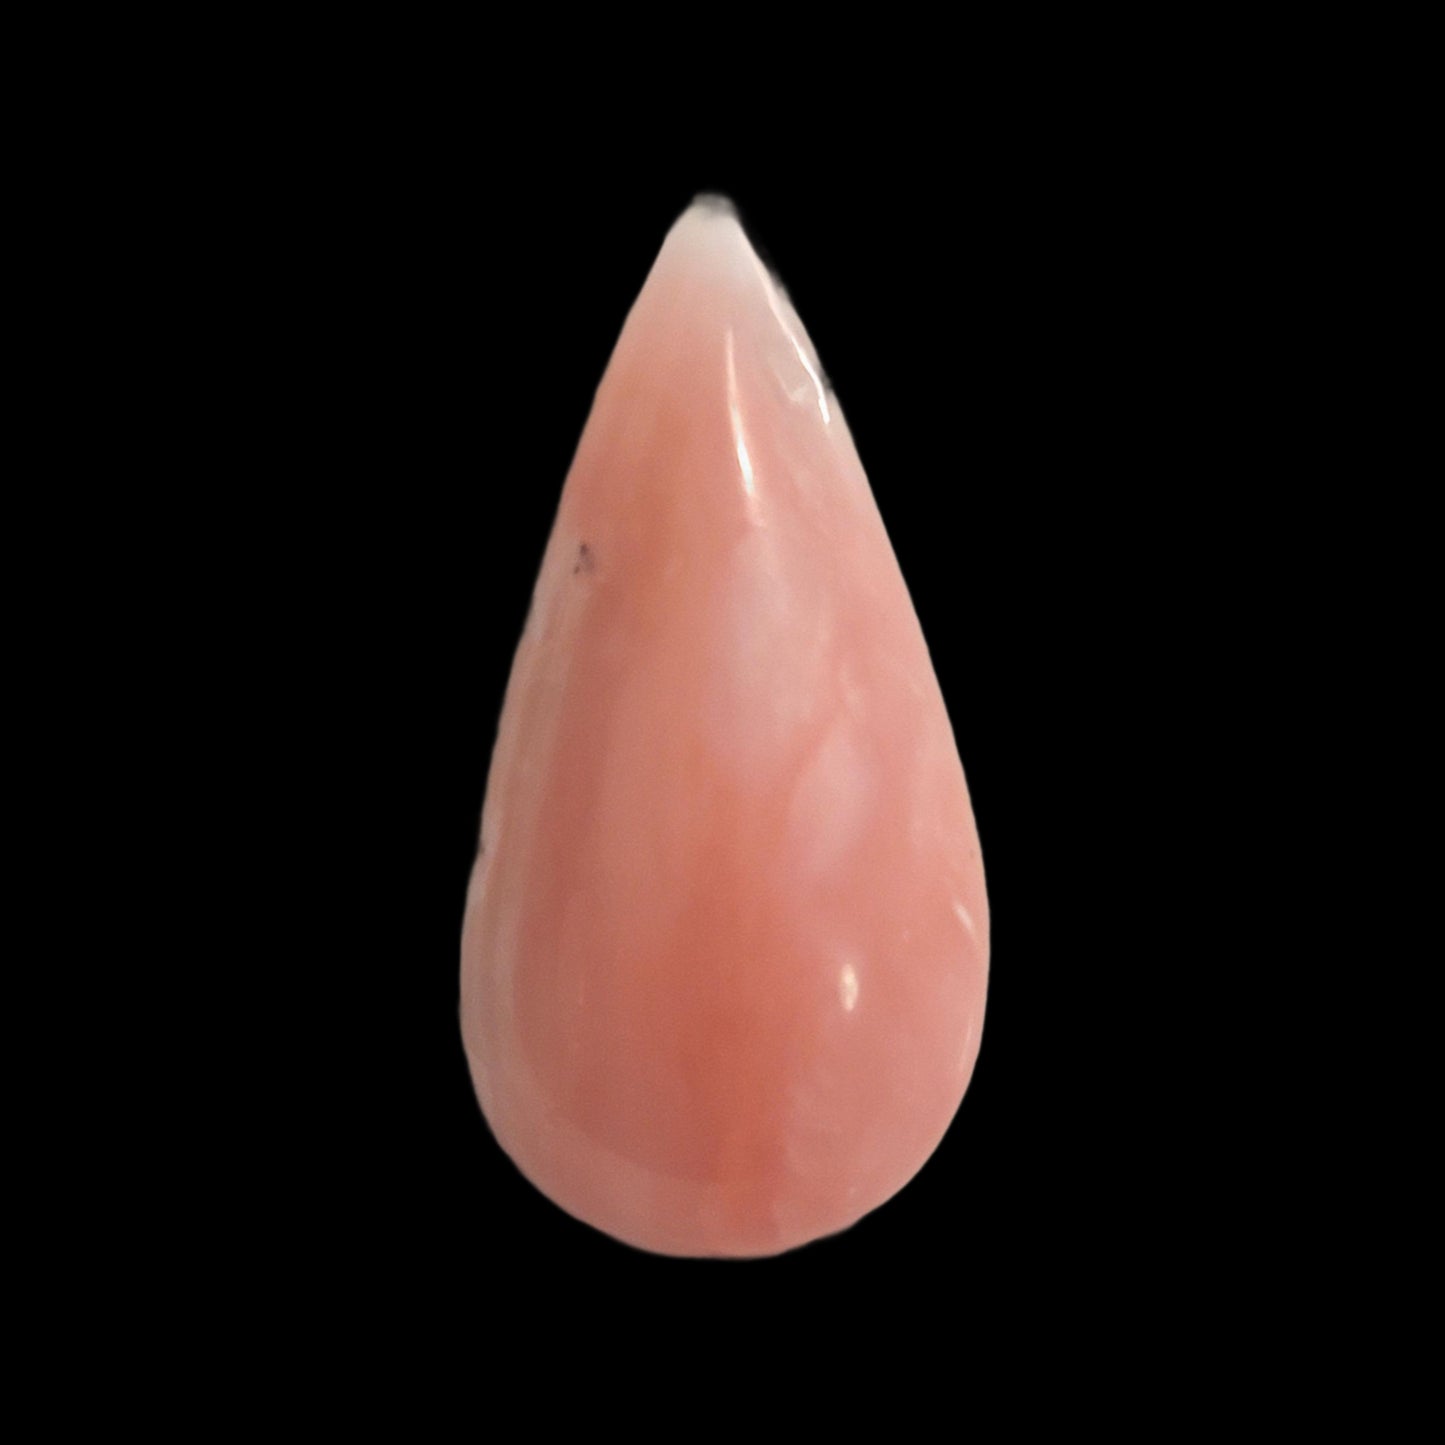 Pink Opal Cabochon 28mm x 13.5mm x 6.5mm - OPALCABS4001